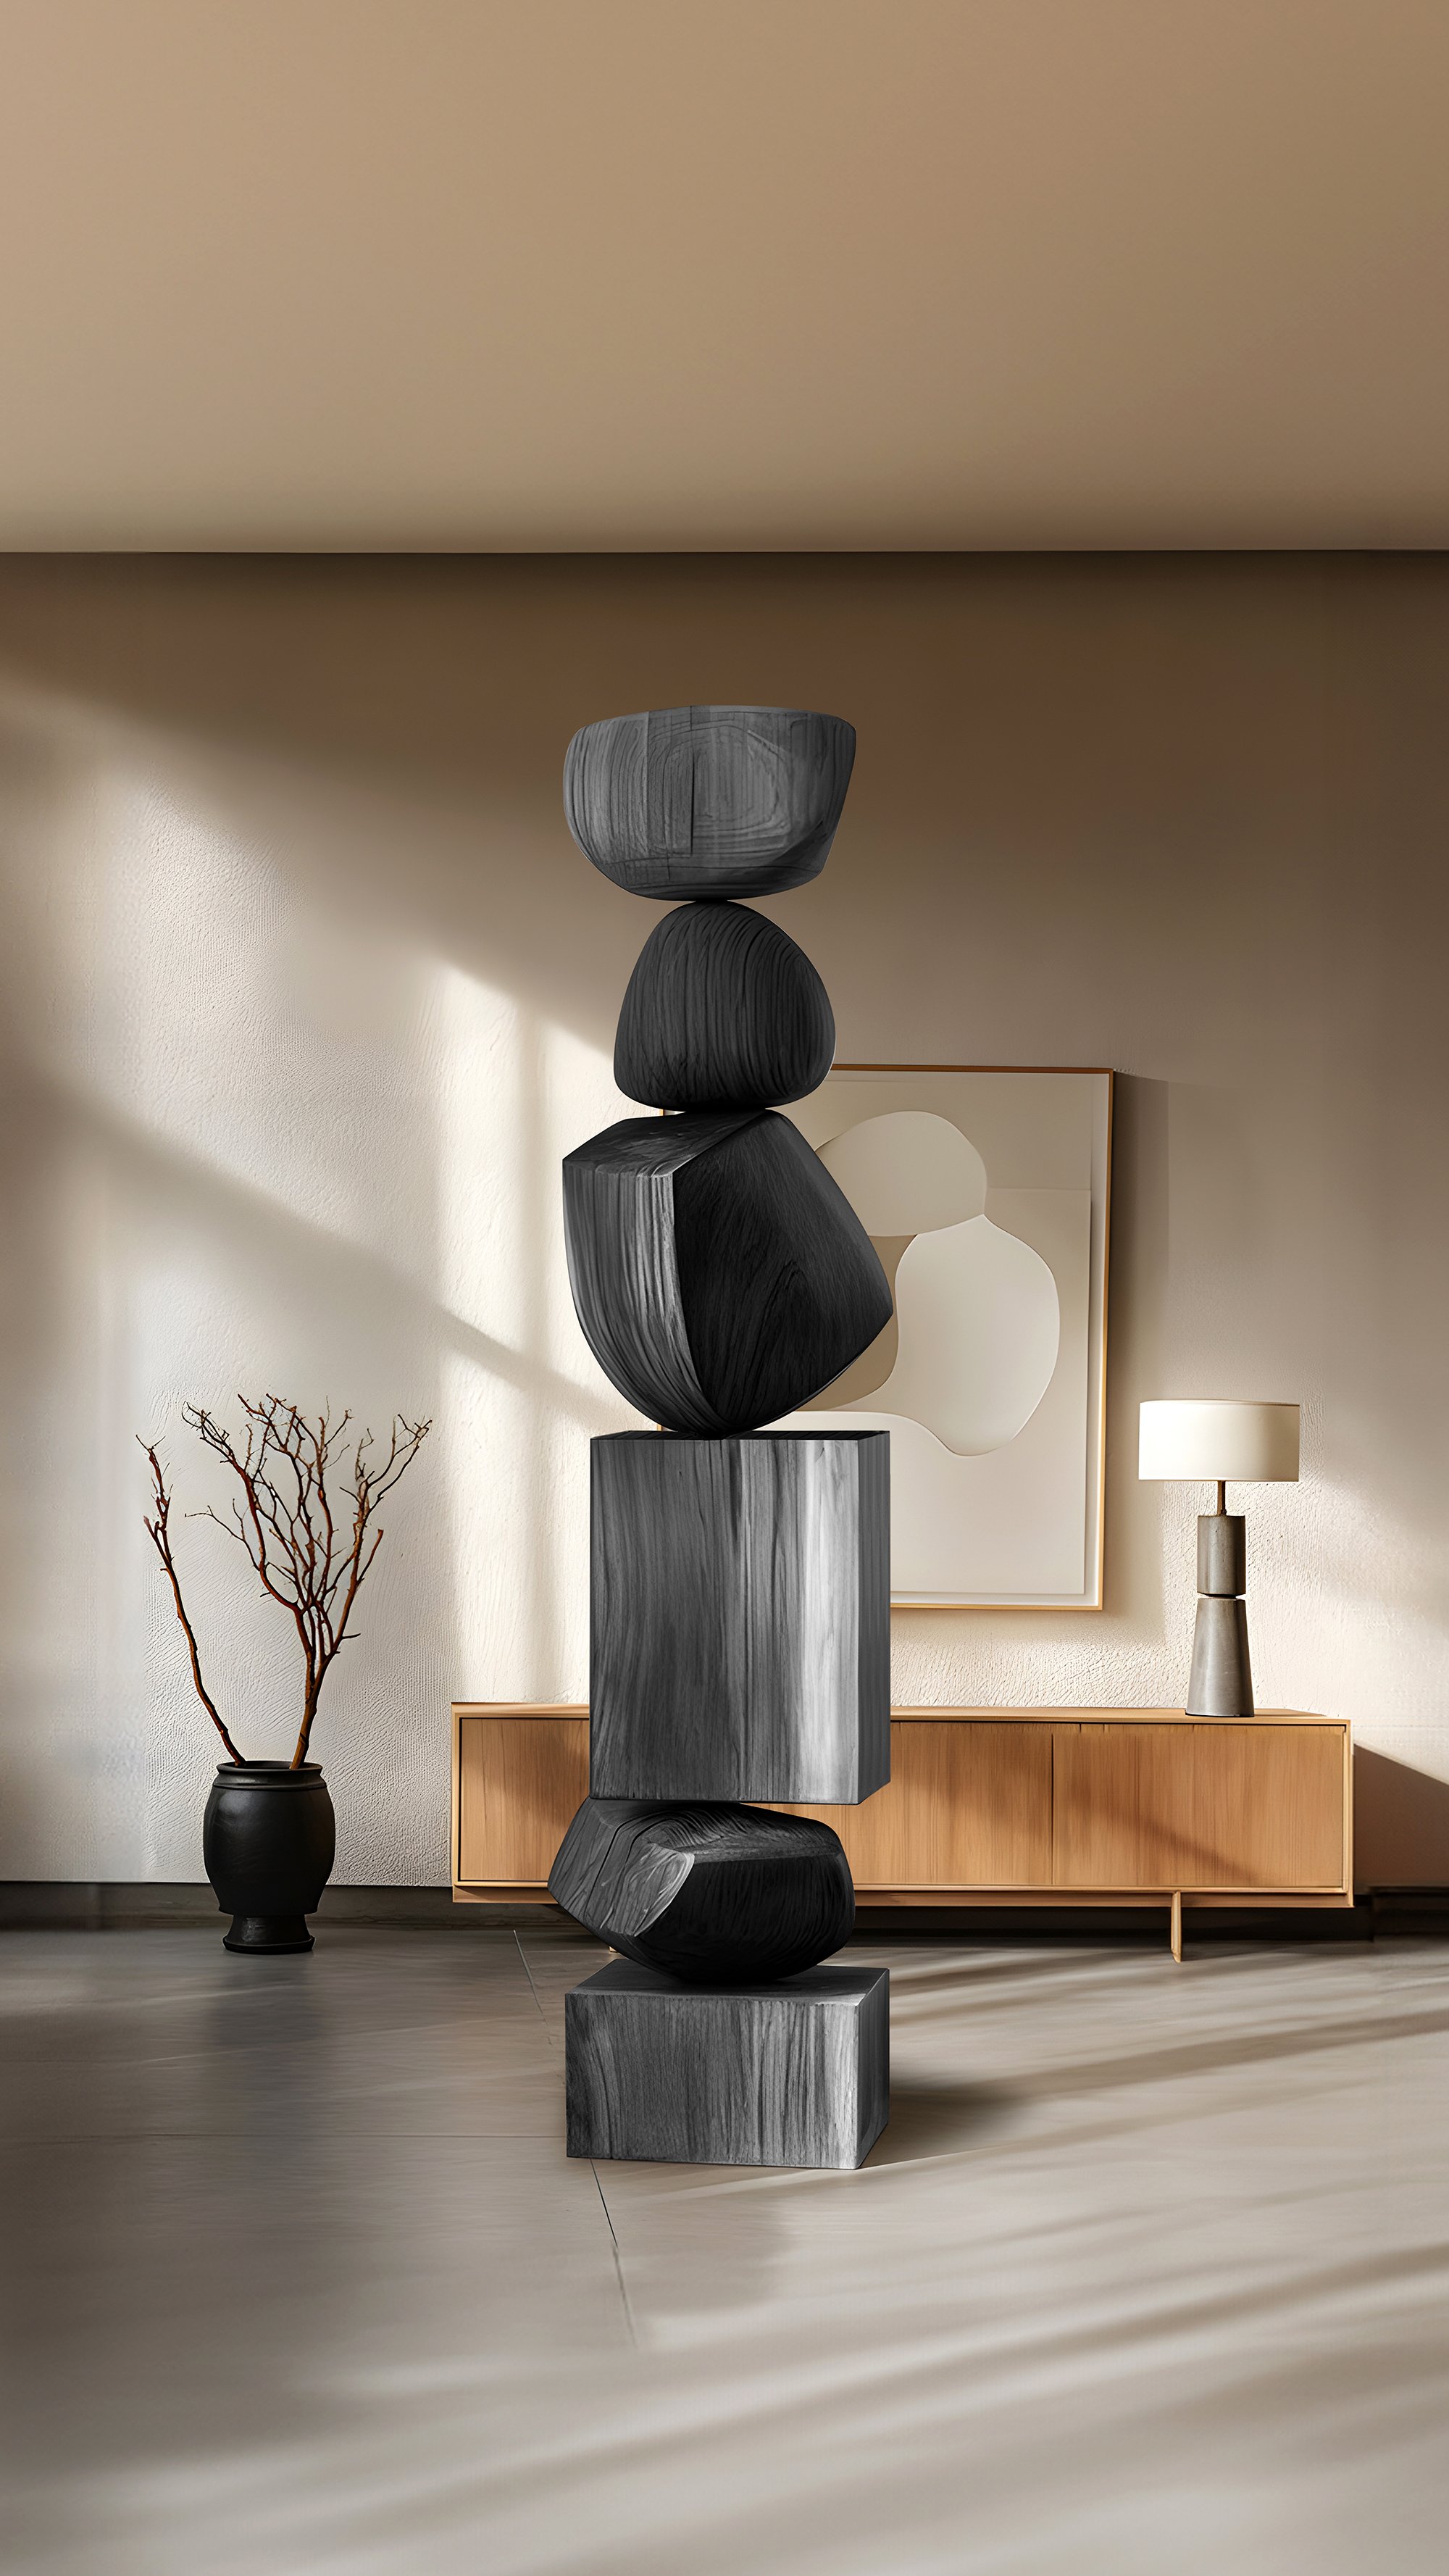 Design of Sleek Darkness, Modern Black Solid Wood Totem by NONO, Still Stand No101 -5.jpg